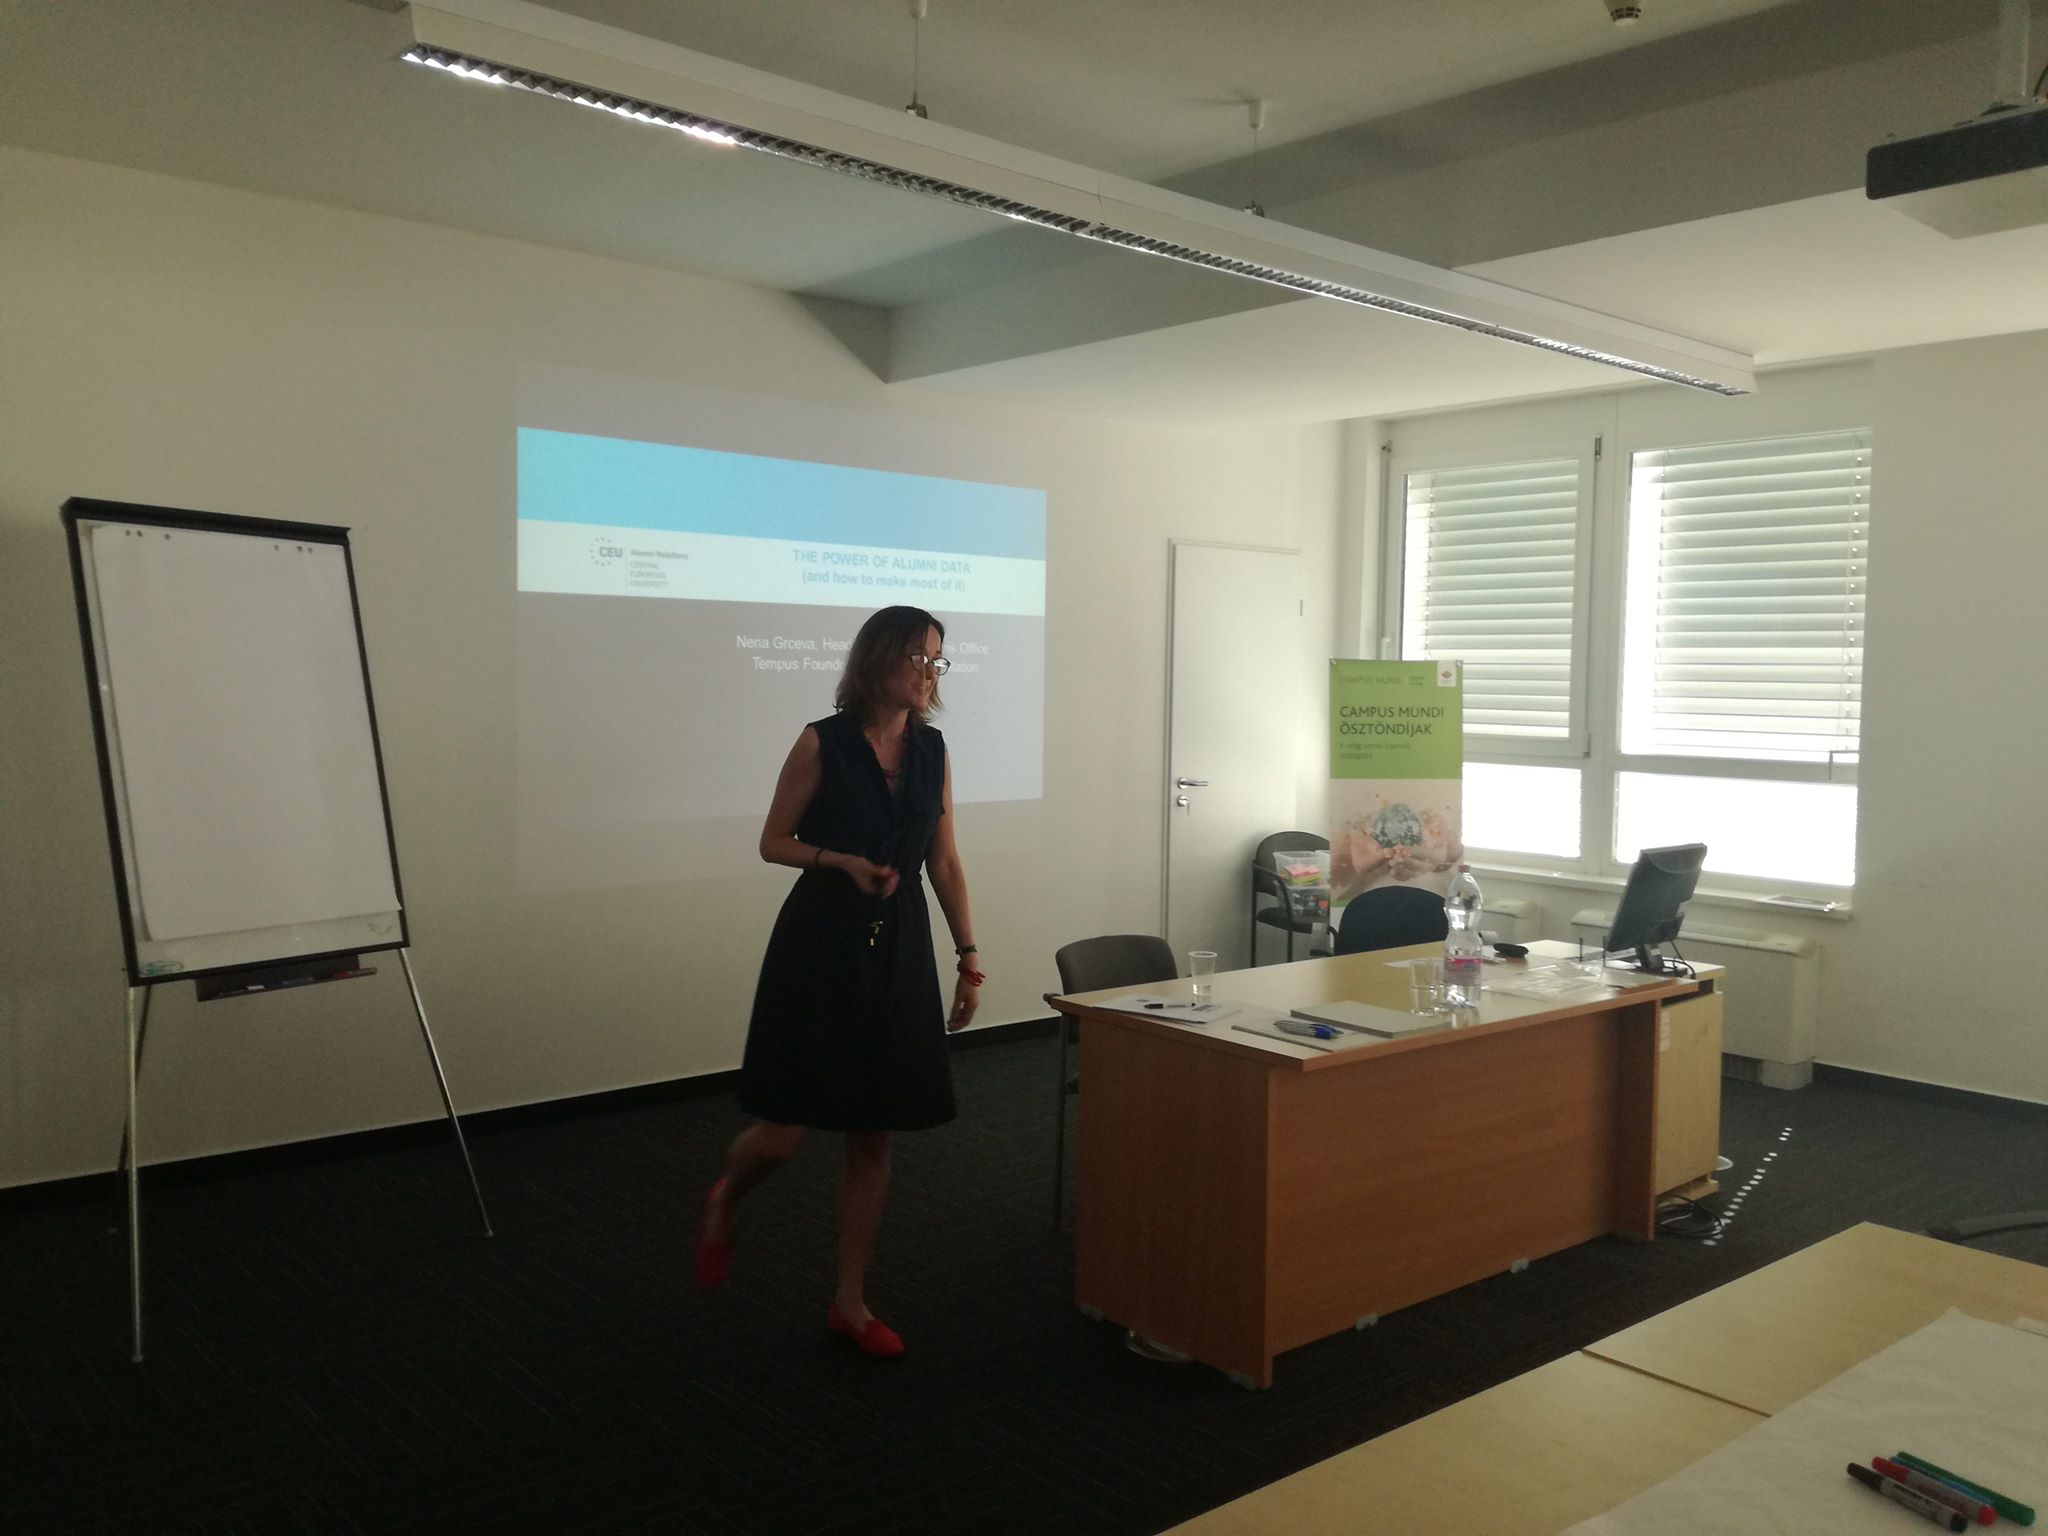 Nena Grceva's (CEU) presentation